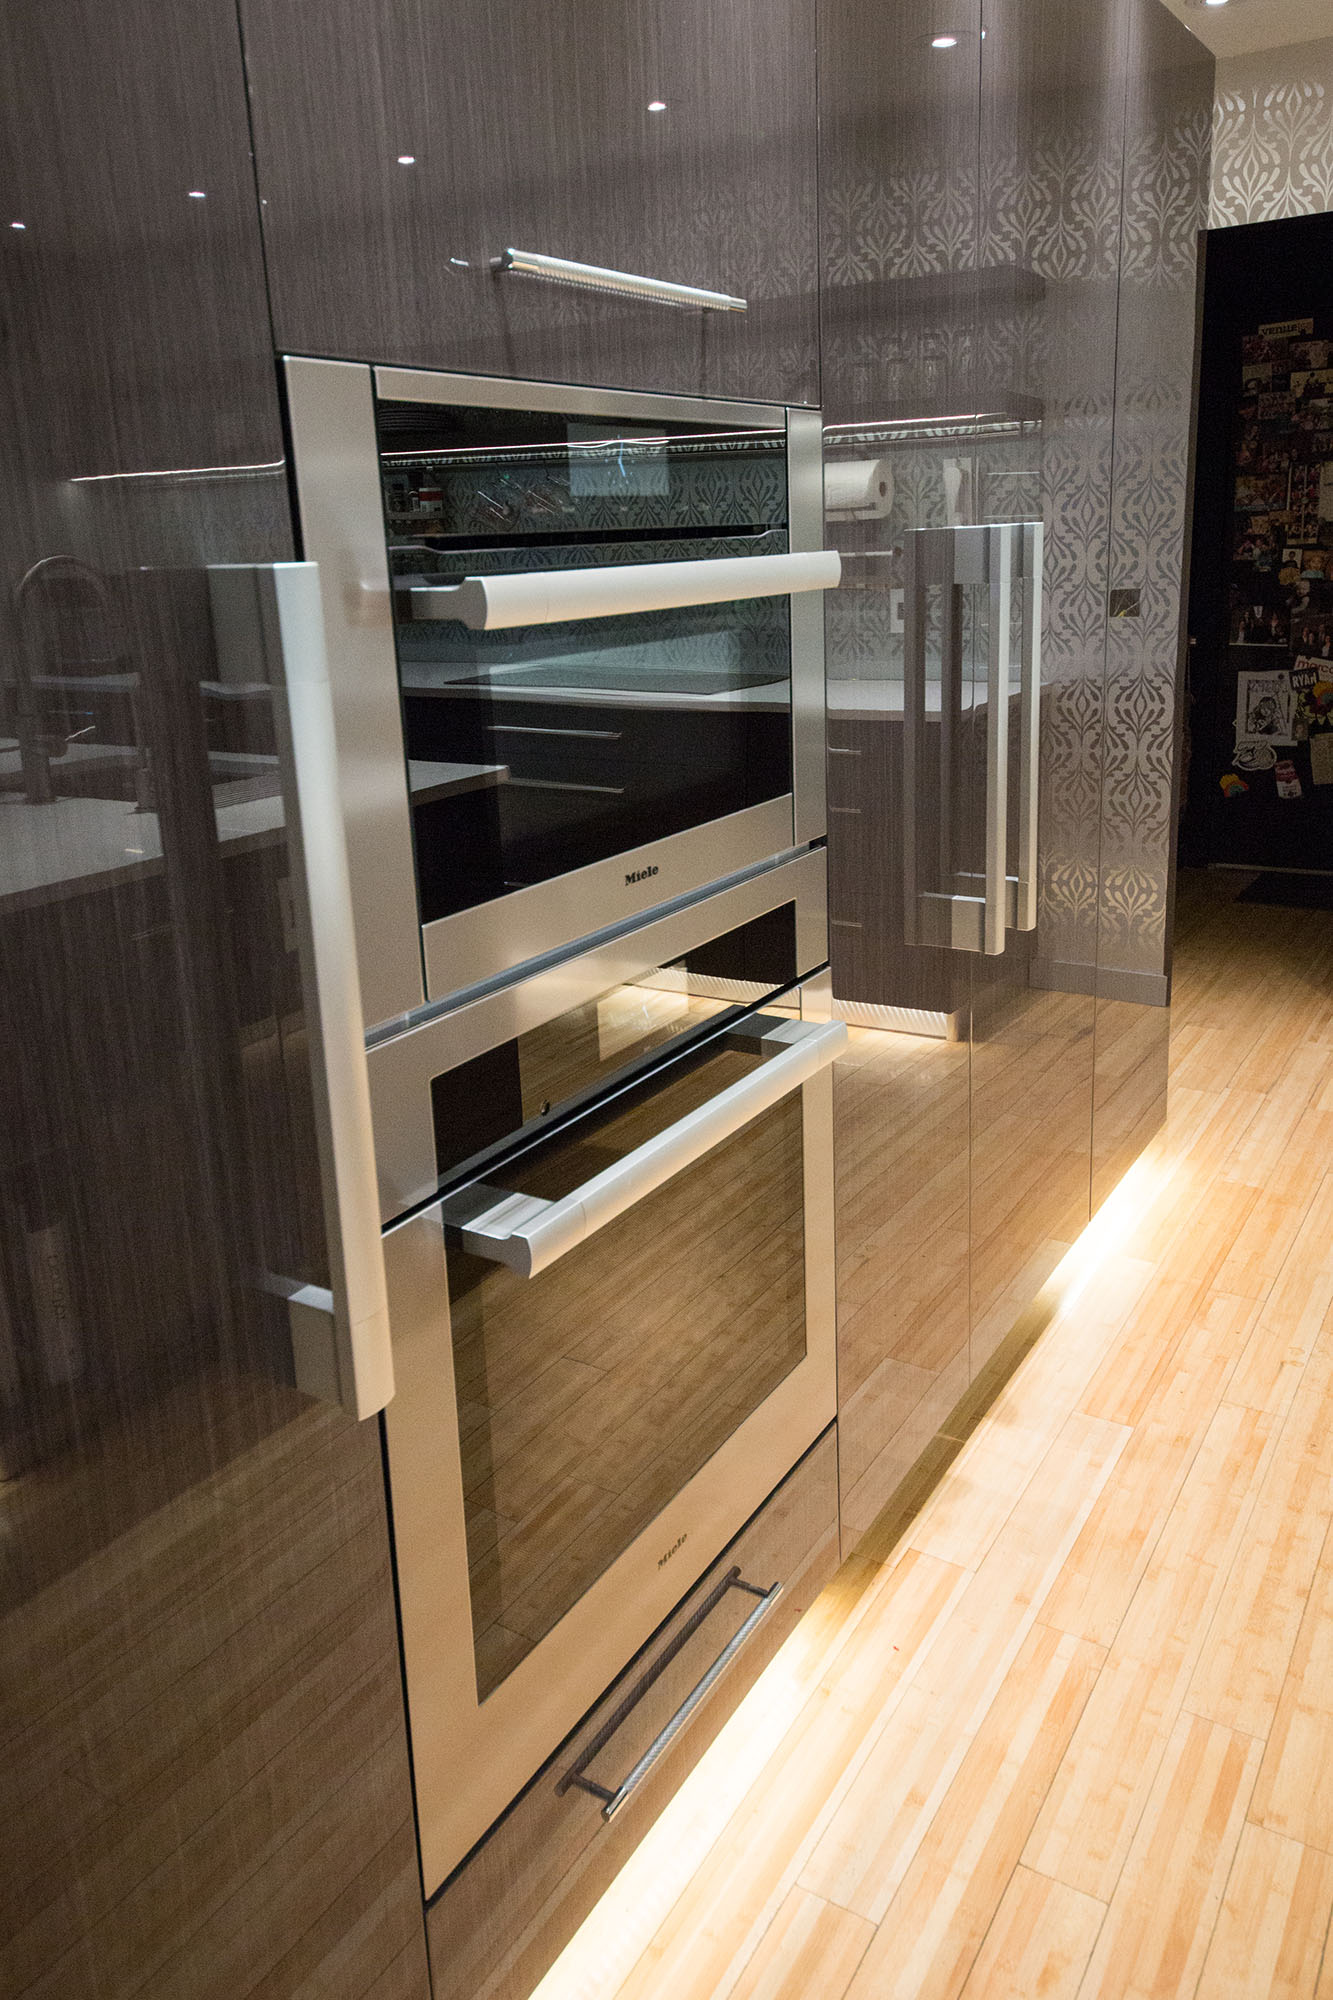 Tall Pantry Storage Ovens Refrigerator Wood Grain Flat European Cabinets Wood Floors Elite Cabinets Tulsa Kitchen Design